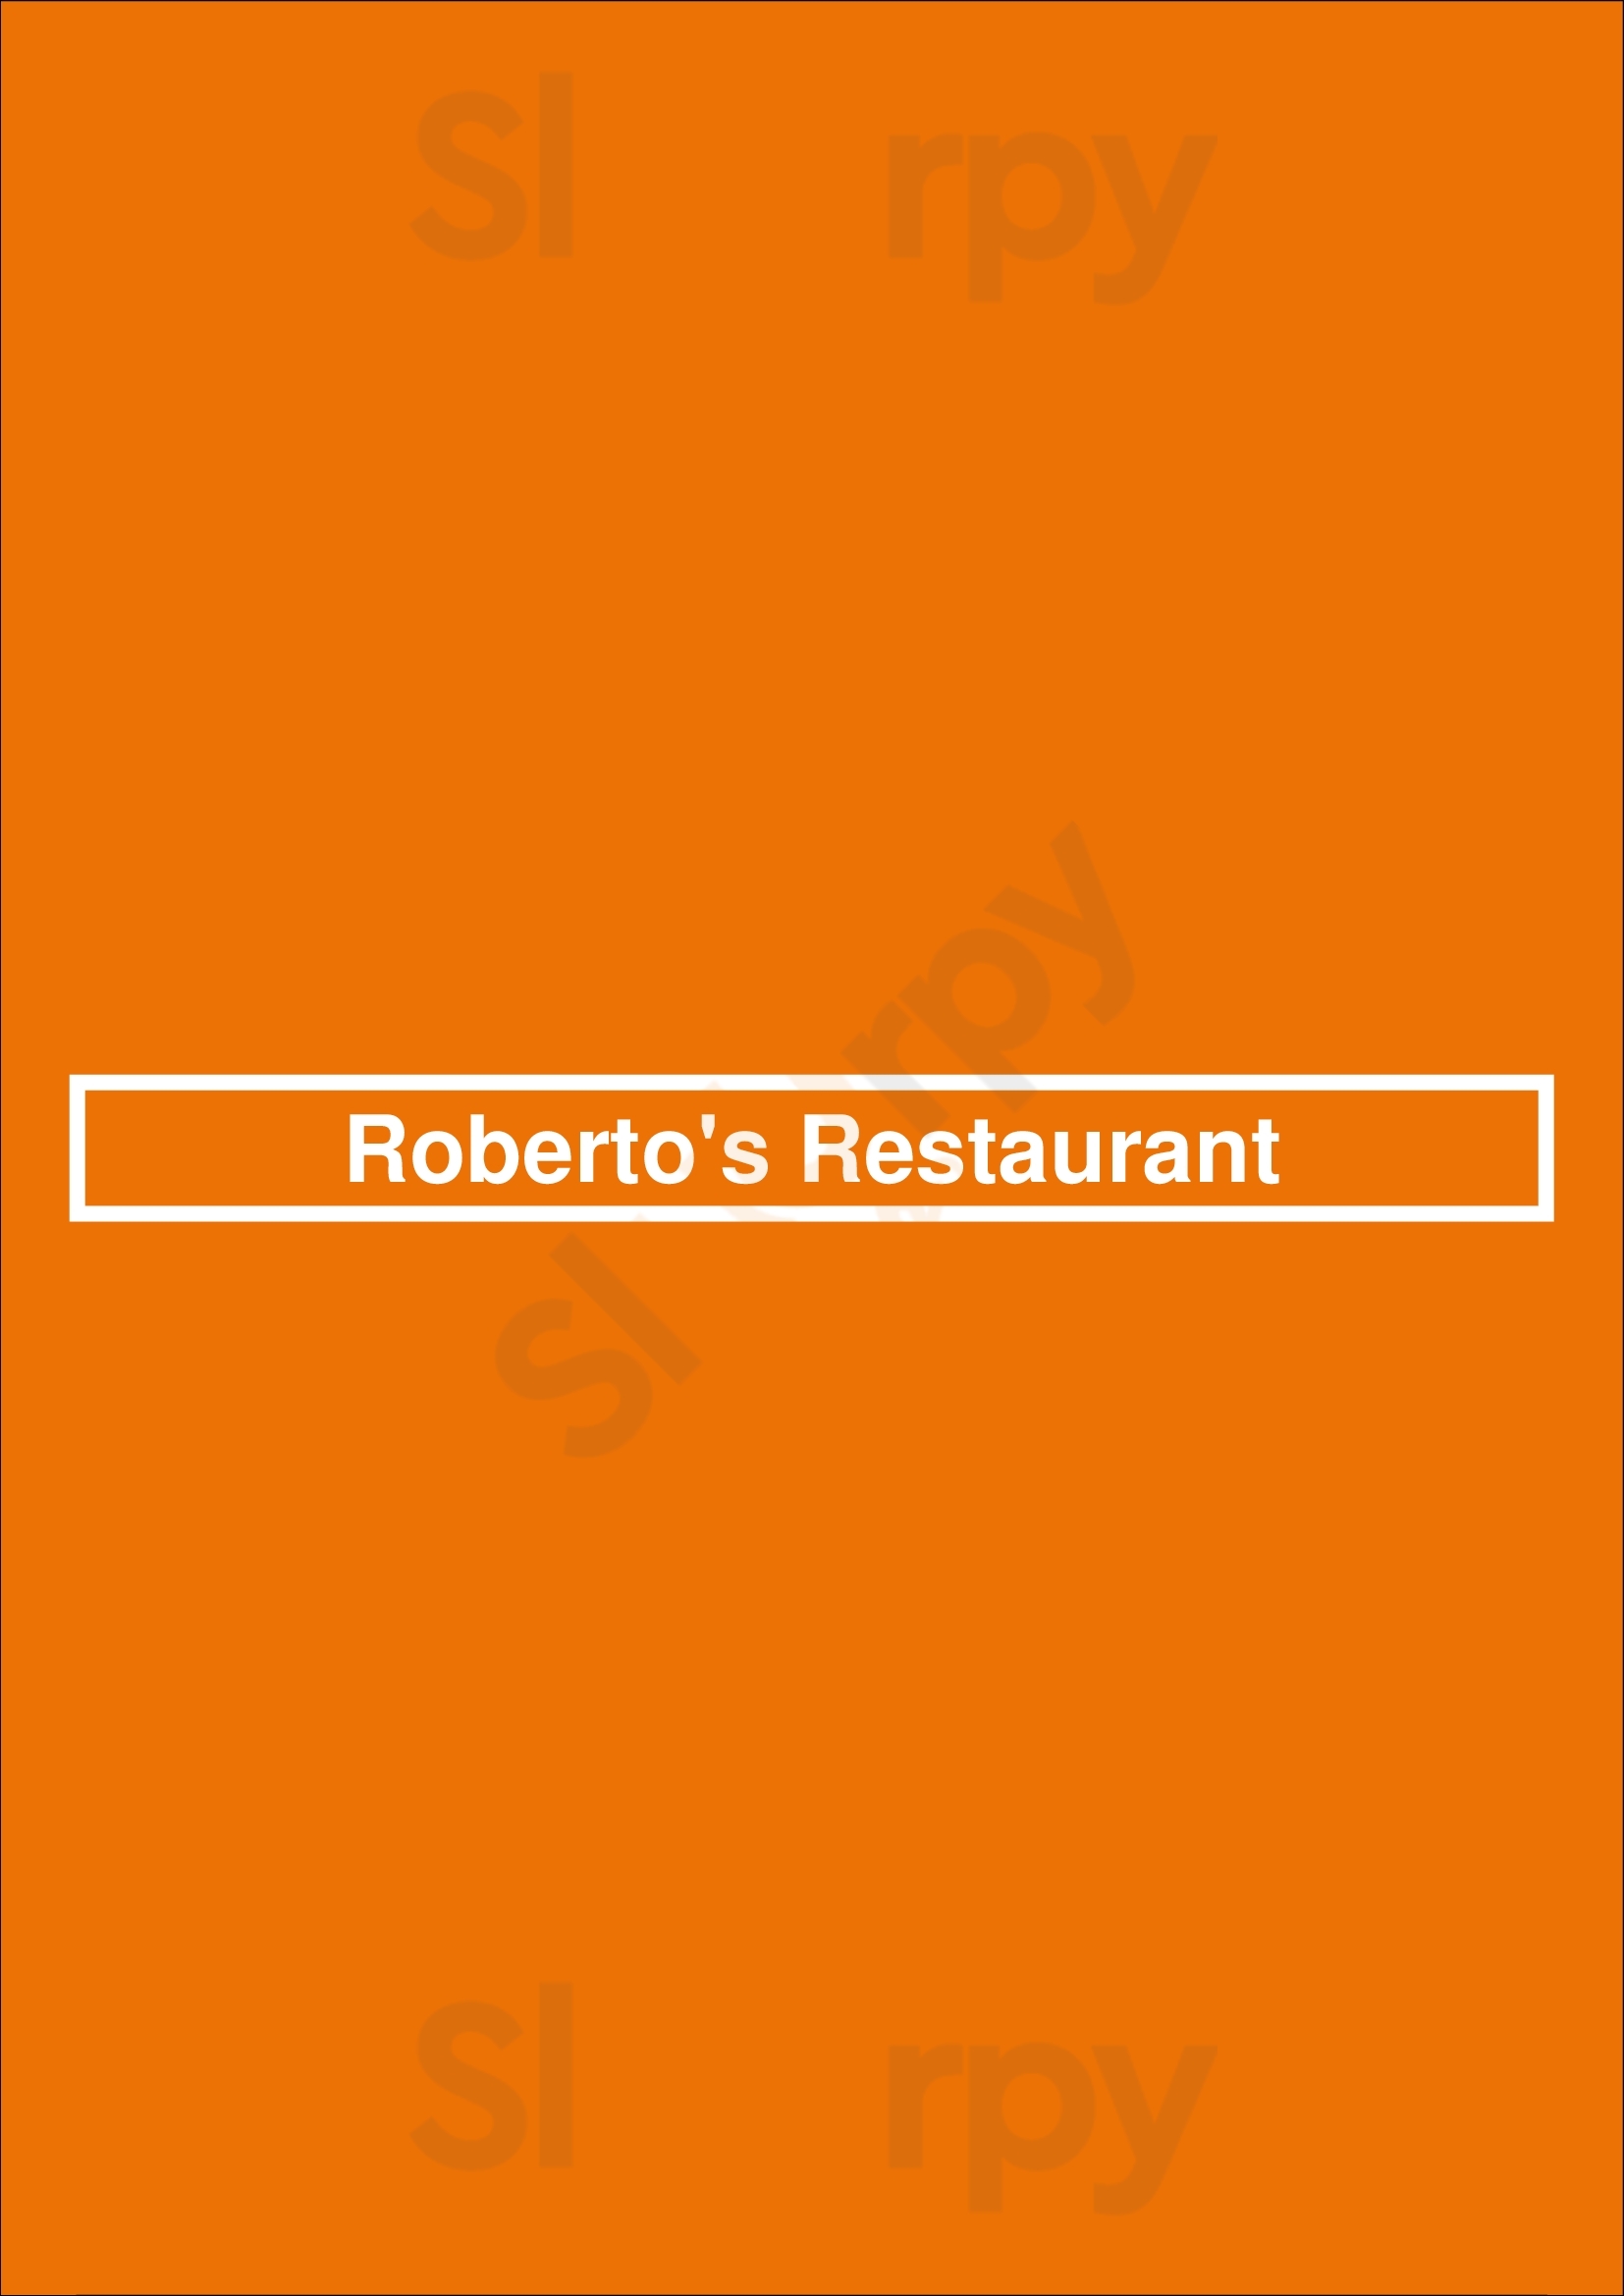 Roberto's Restaurant Amsterdam Menu - 1